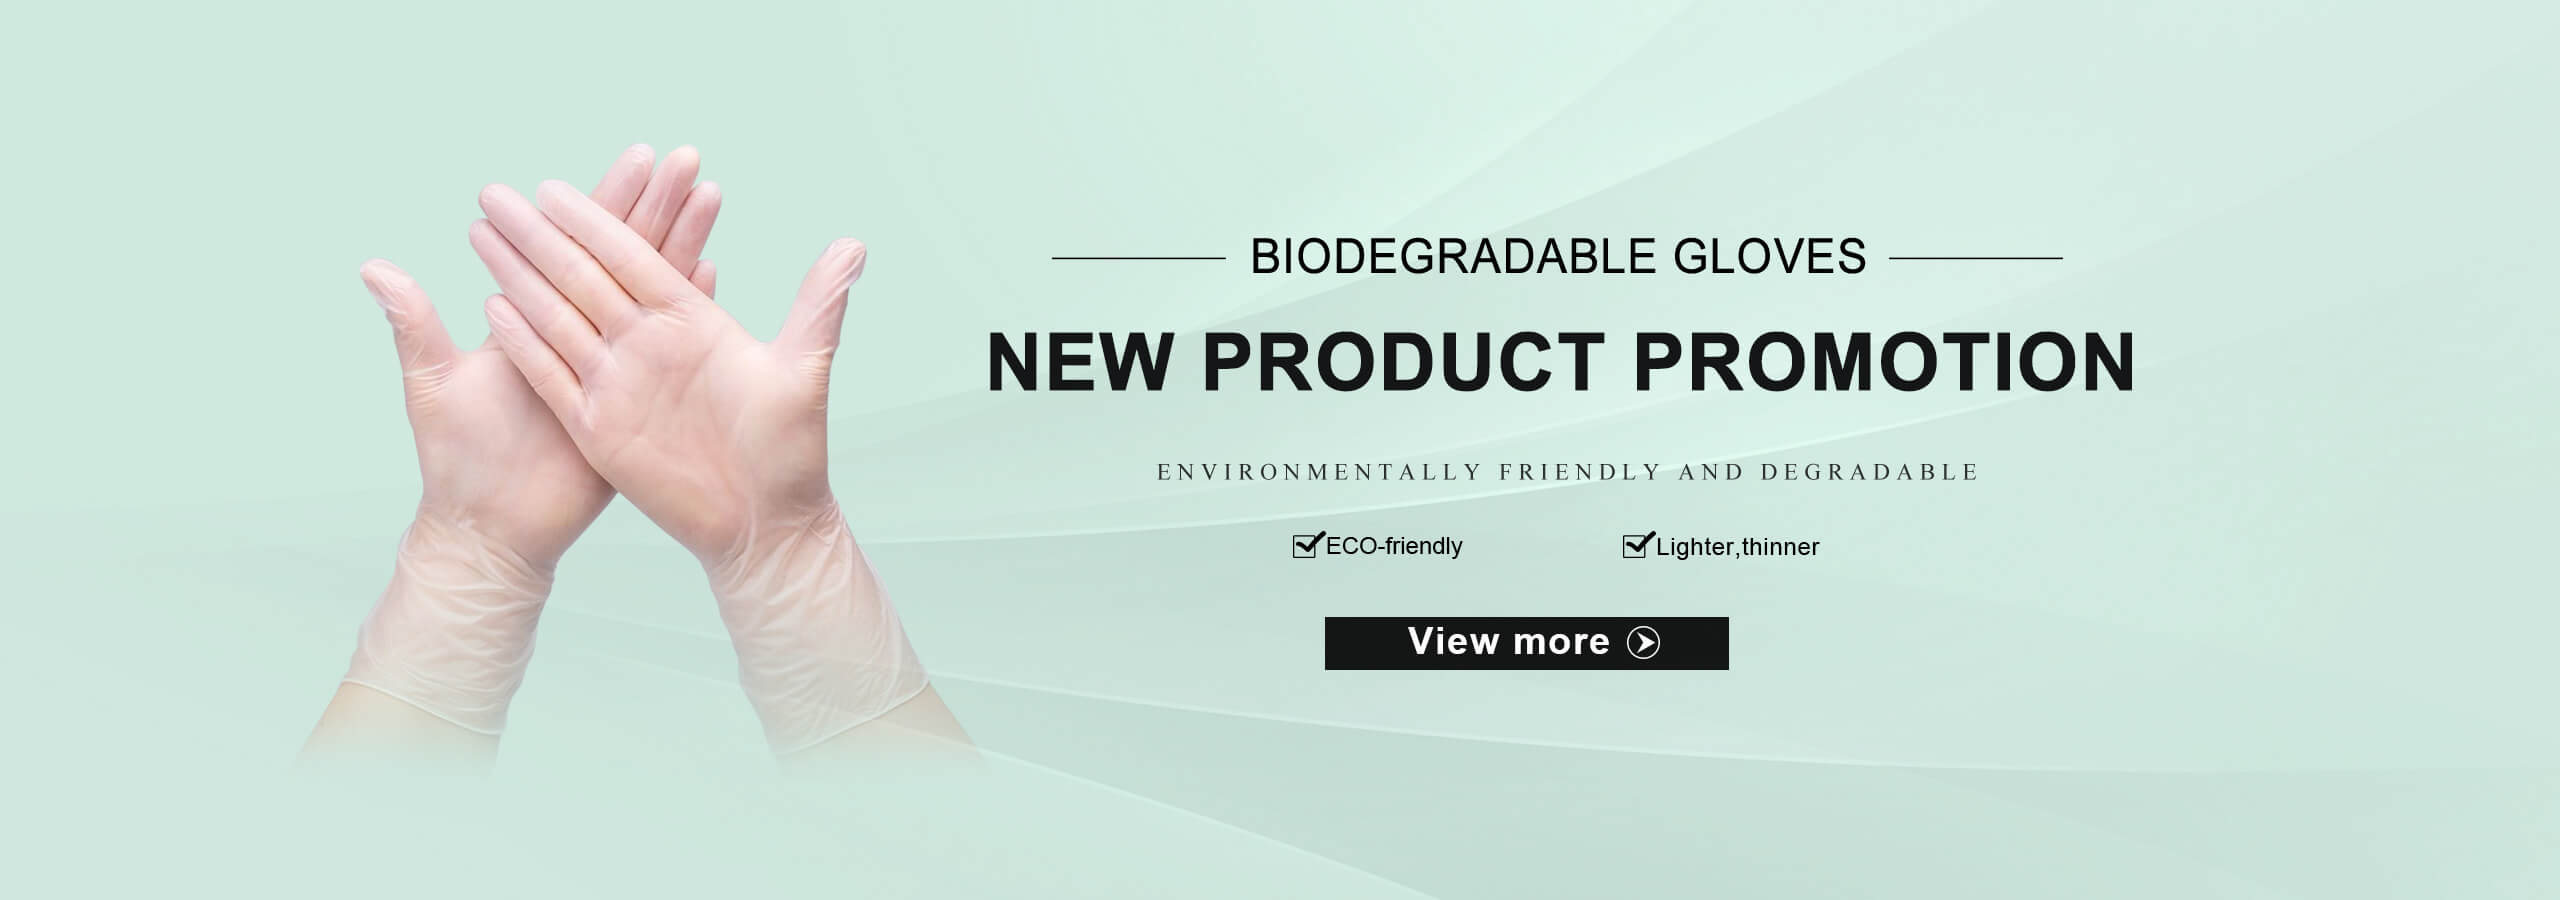 Biodegradable gloves banner